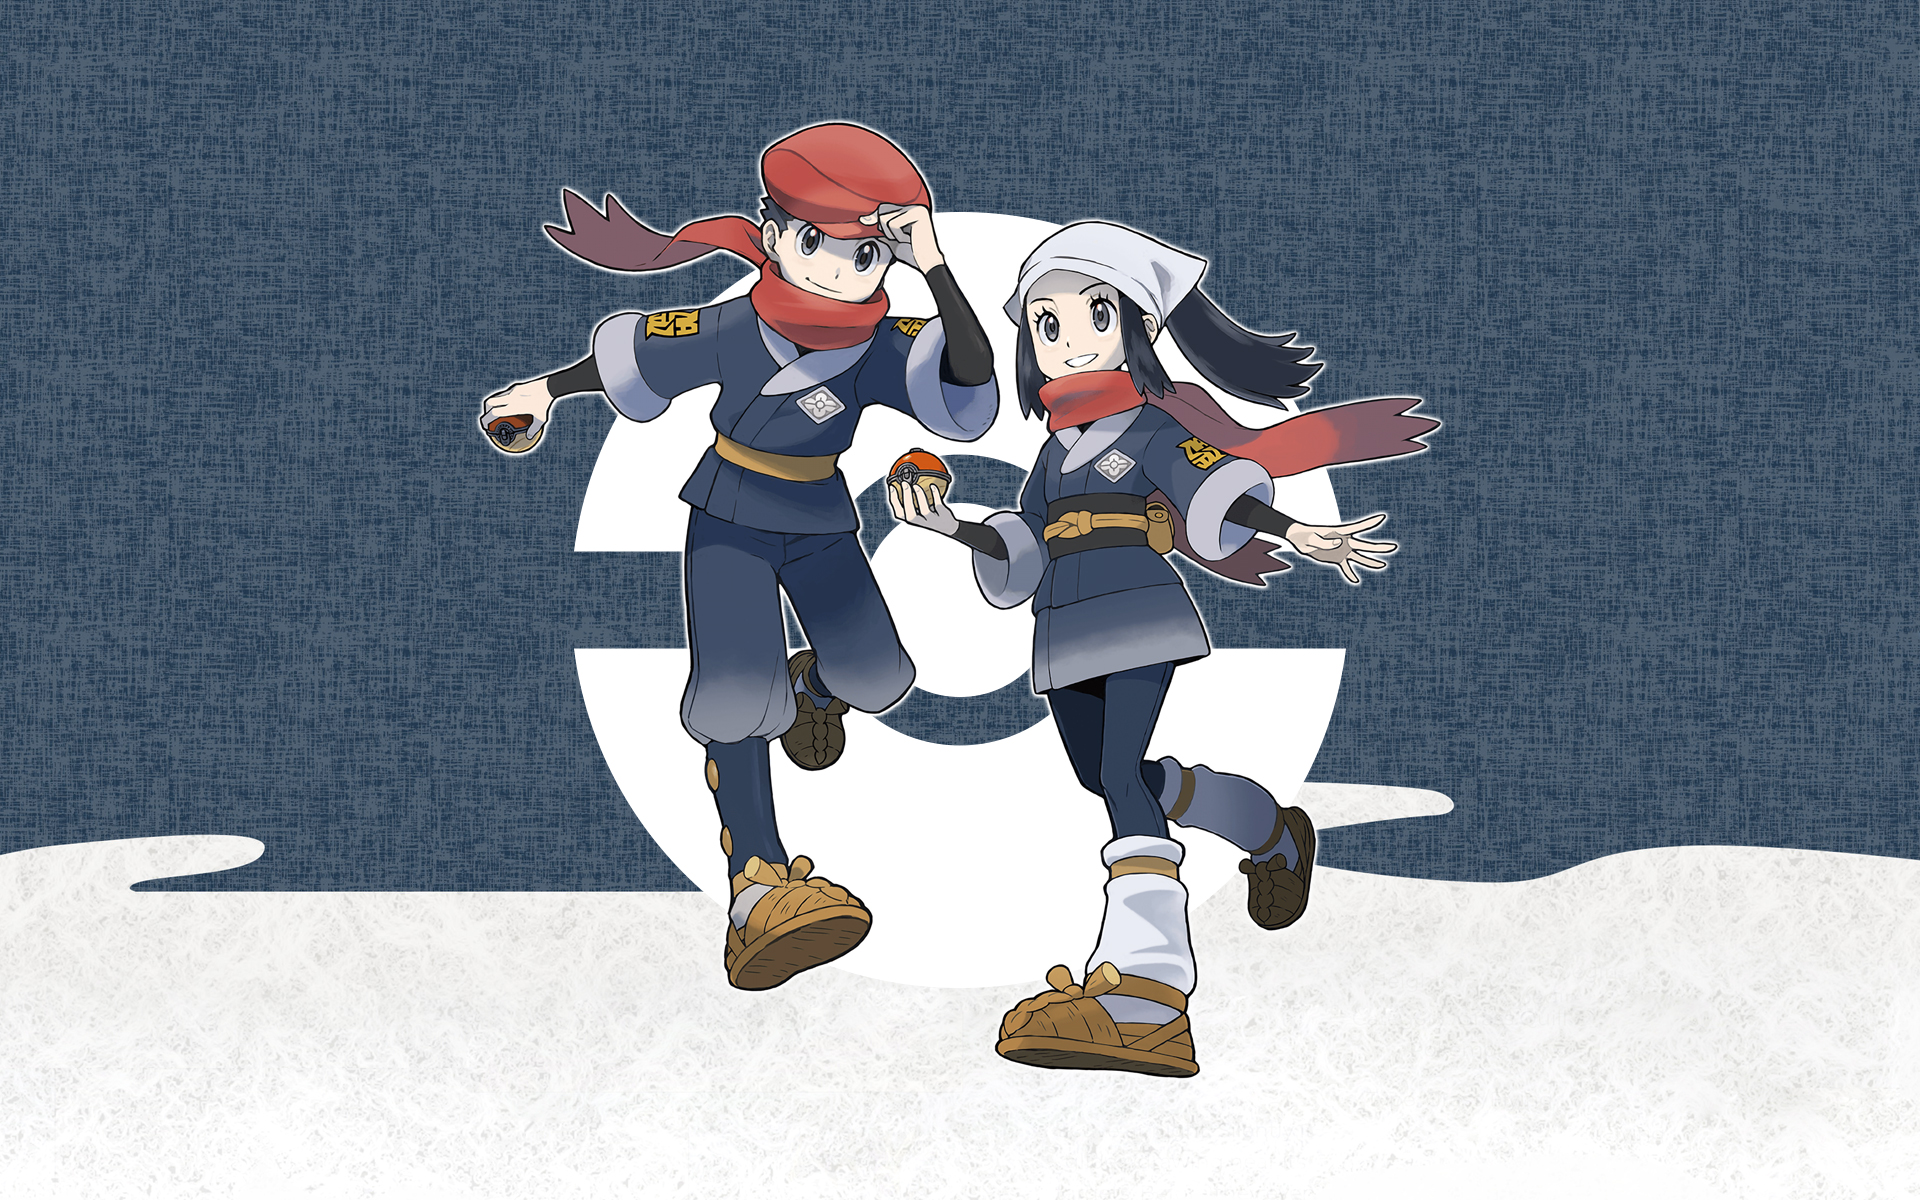 Pokemon Legends Arceus - Dawn & Lucas (Phone Wallpaper) : r/pokemon